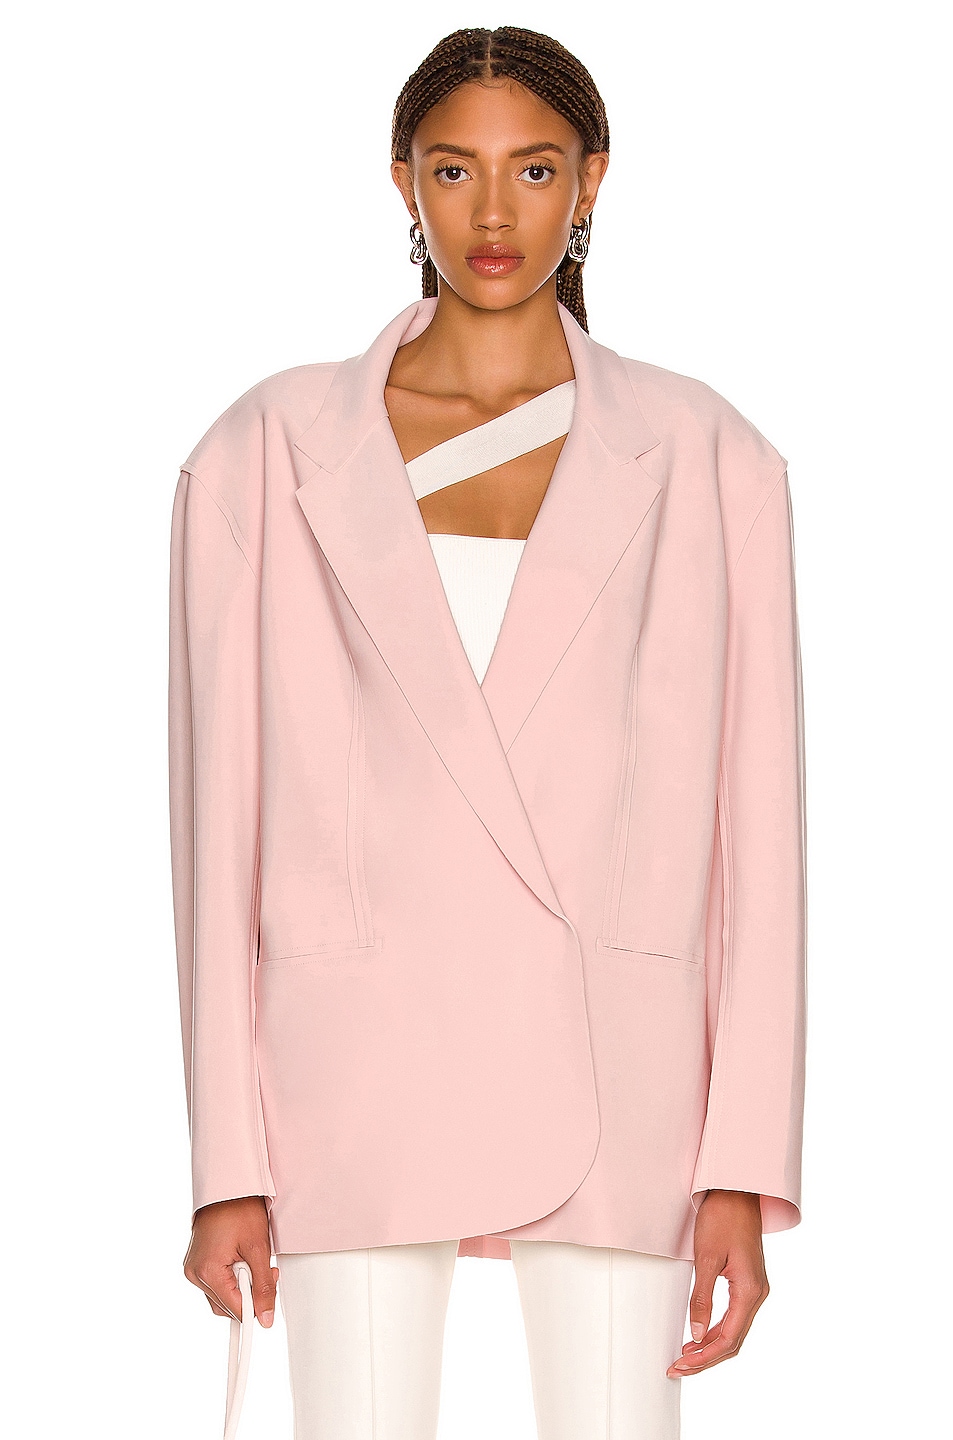 Norma Kamali Oversized Double Breasted Jacket in Blush | FWRD